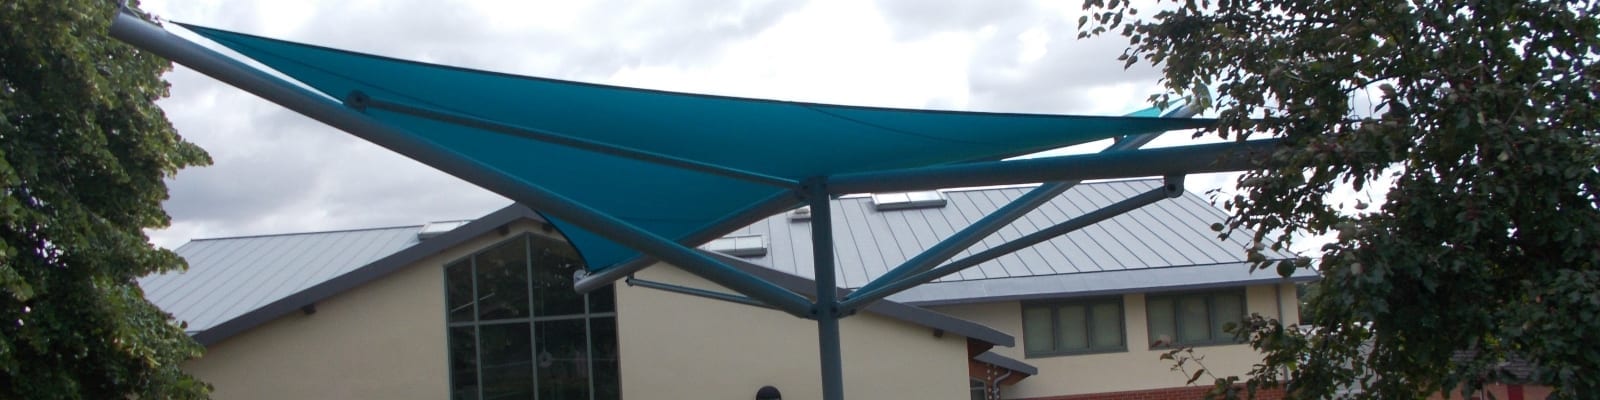 Bishop Stortford College Fabric Canopy